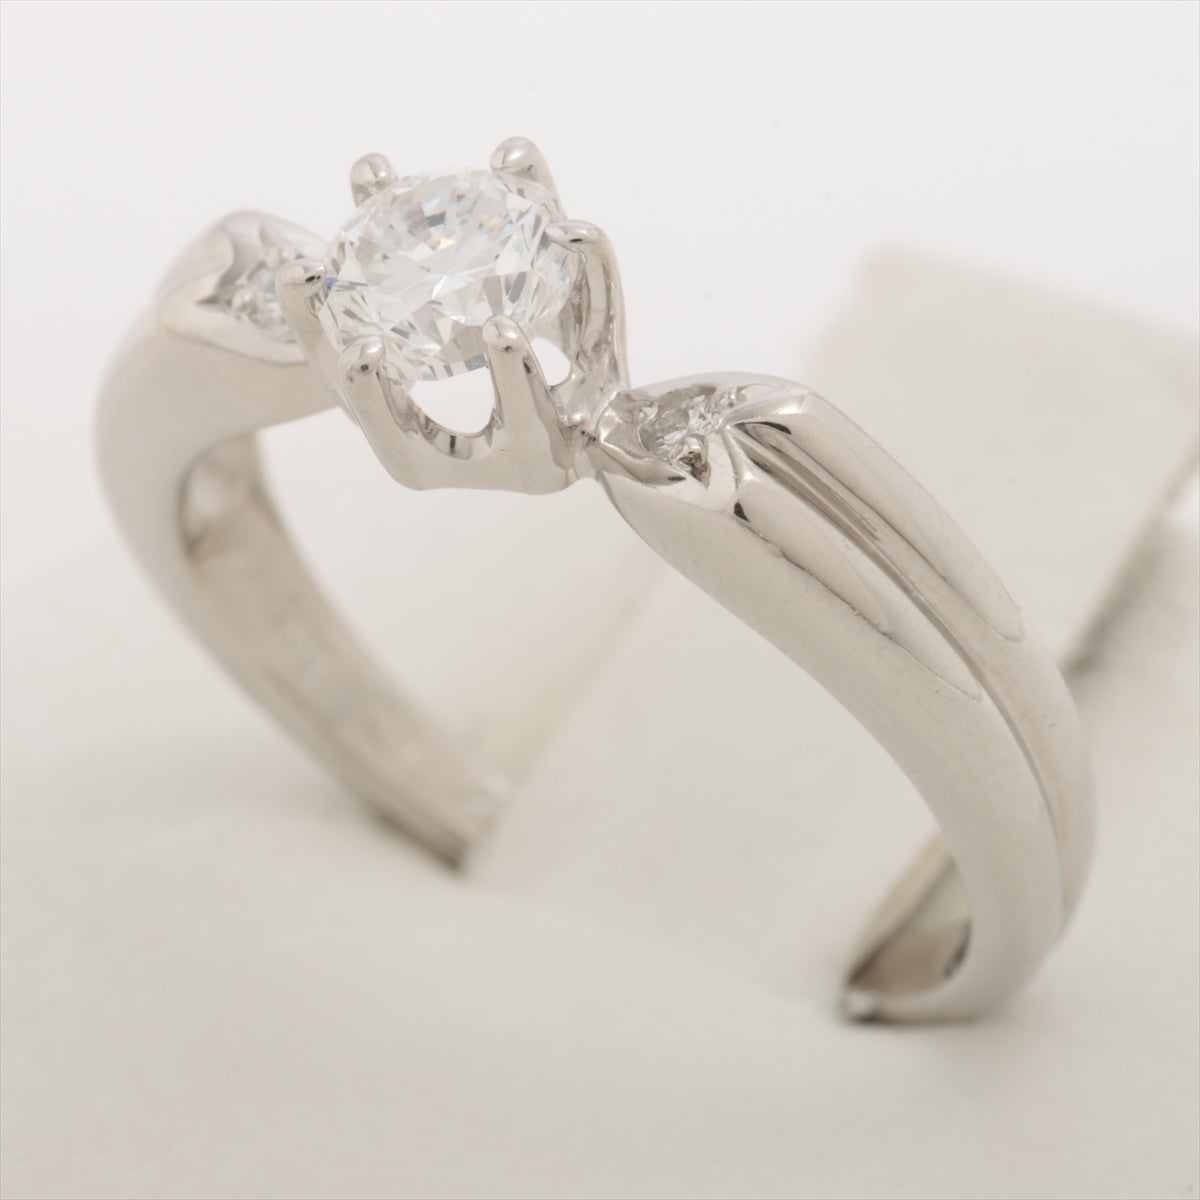 TASAKI Diamond Ring Pt900 4.0g 0.456 0.02